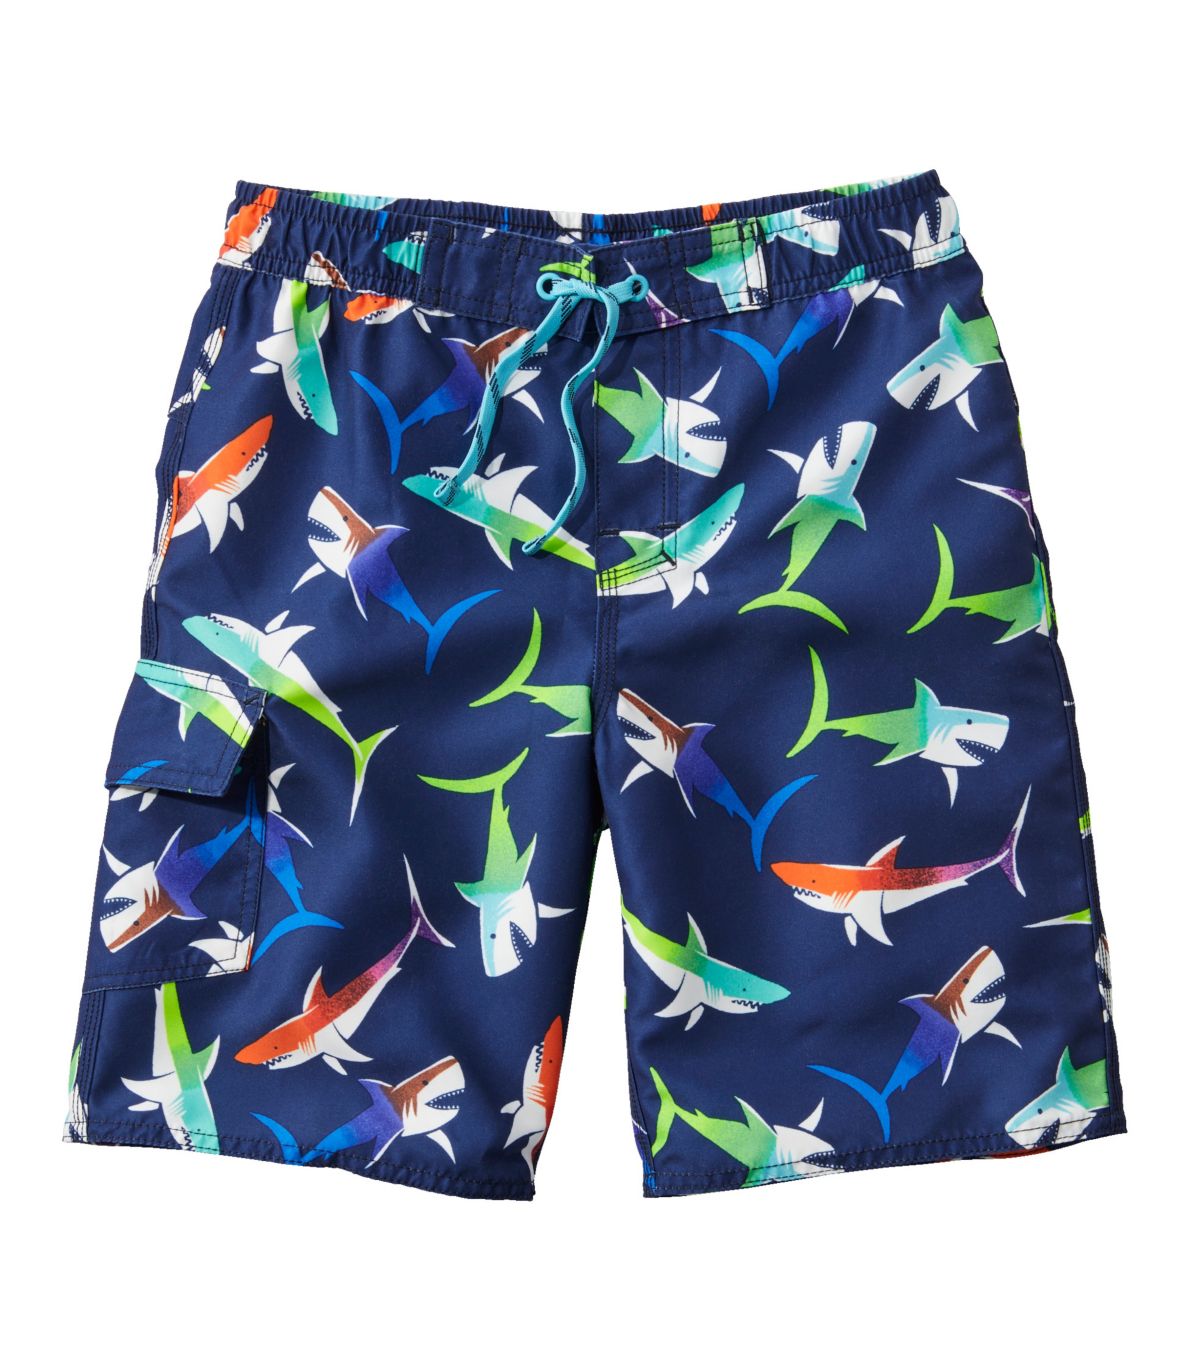 Boys' BeanSport Swim Shorts, Print